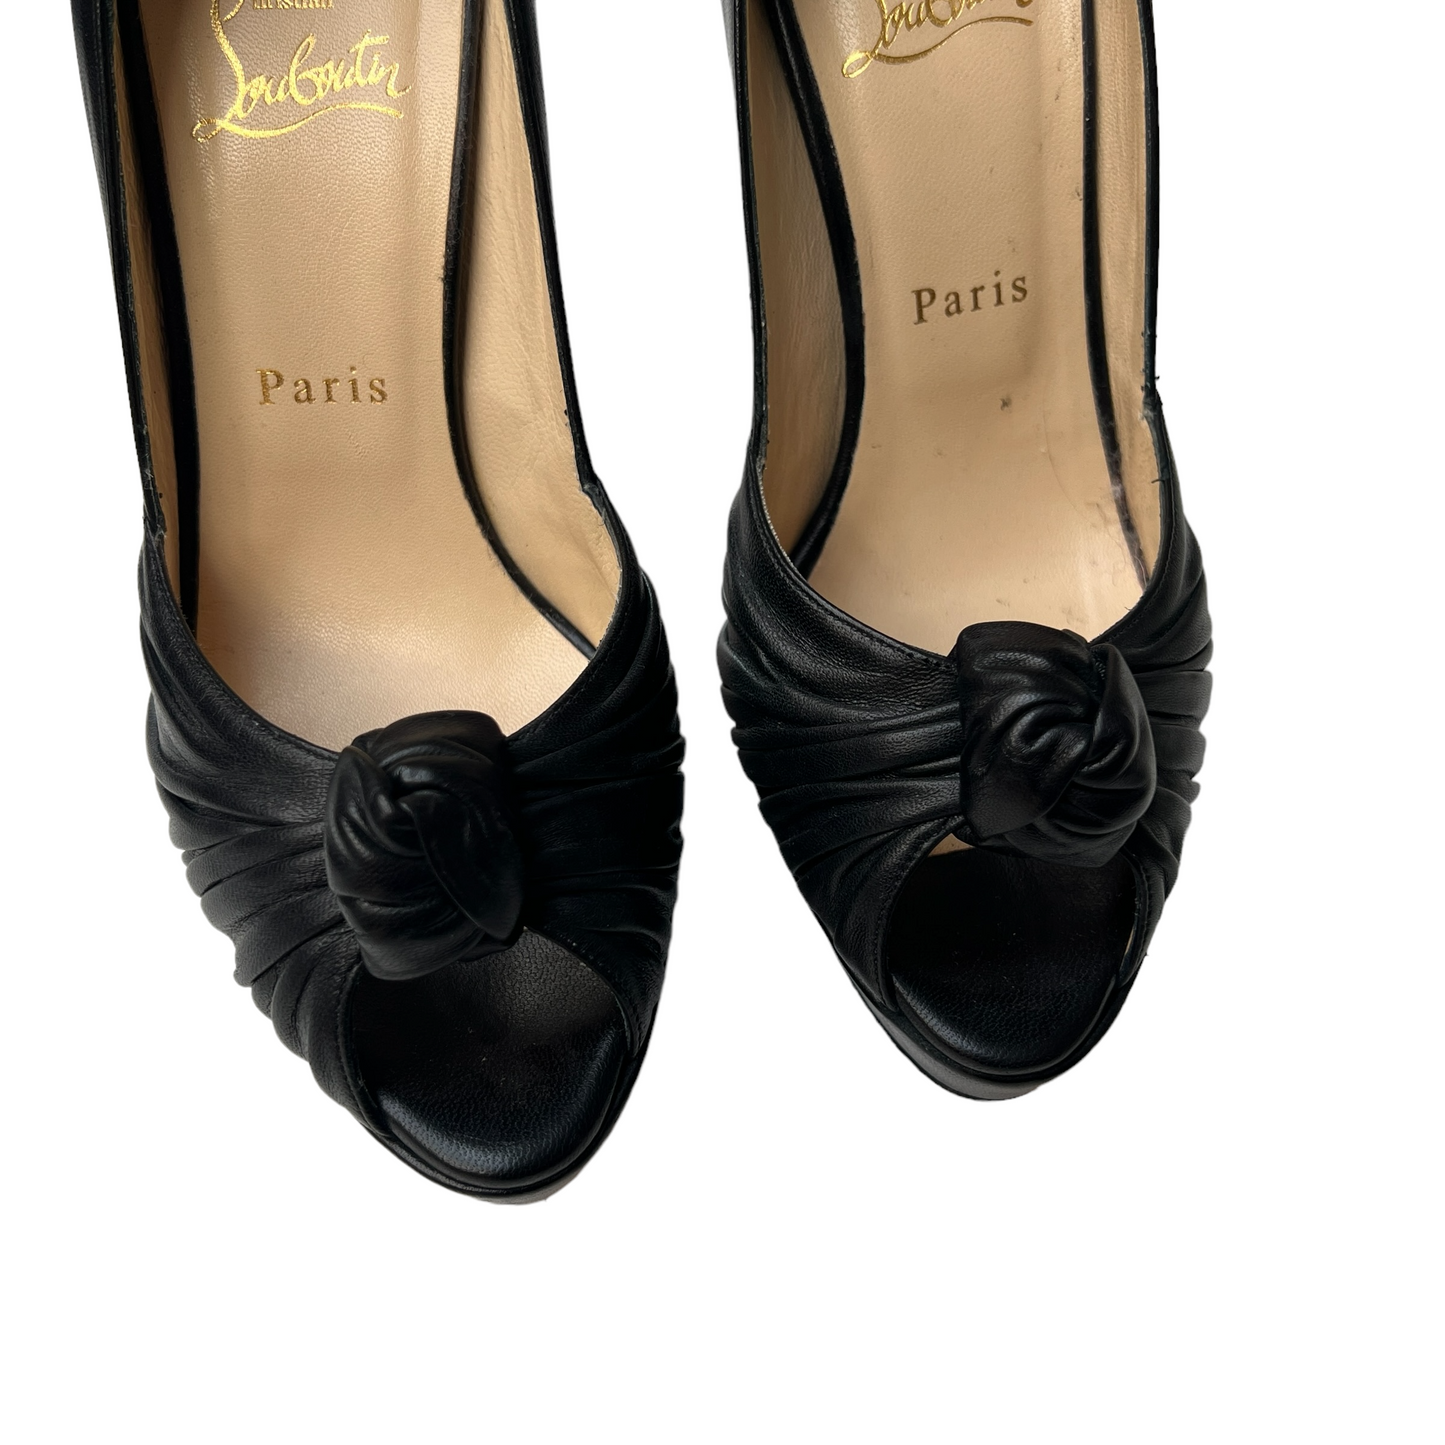 Black Platform Heels - 8.5